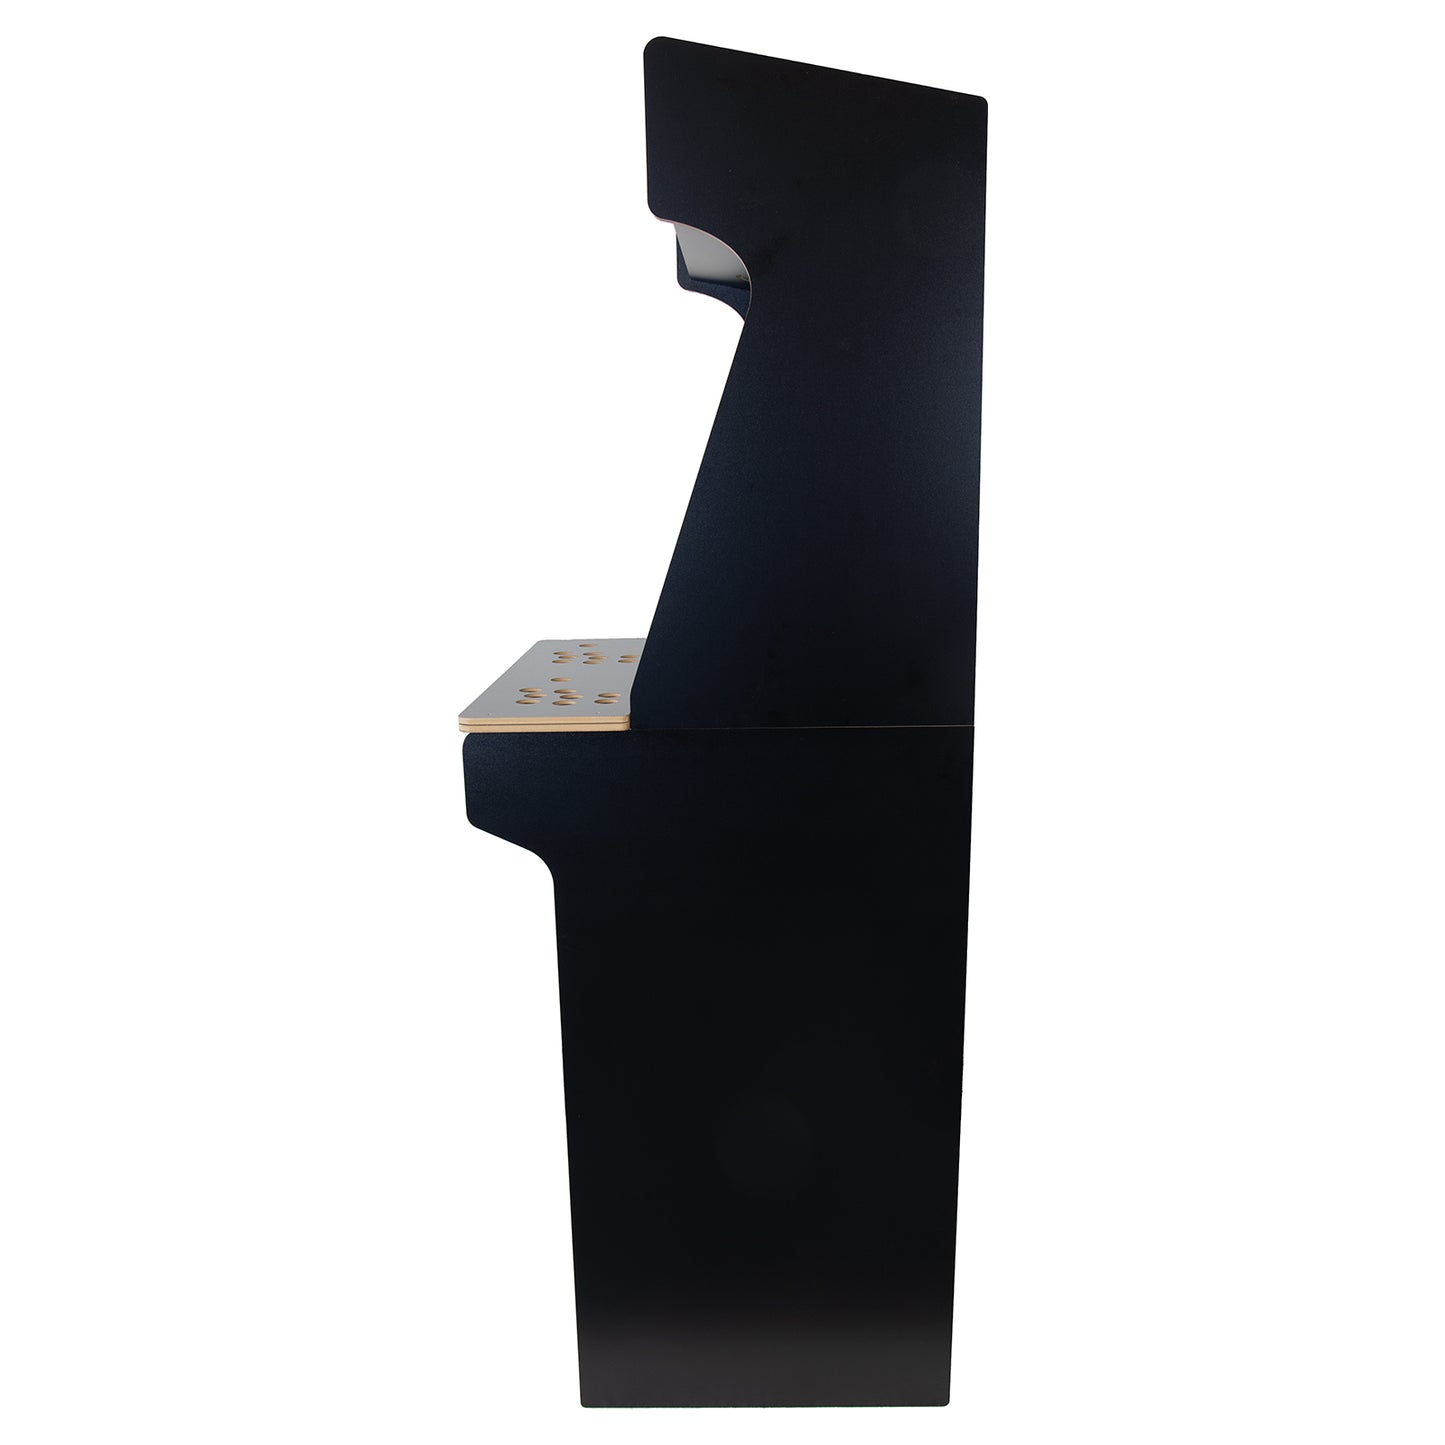 2 Player 24" Upright Arcade Cabinet Flat Pack Kit - Black